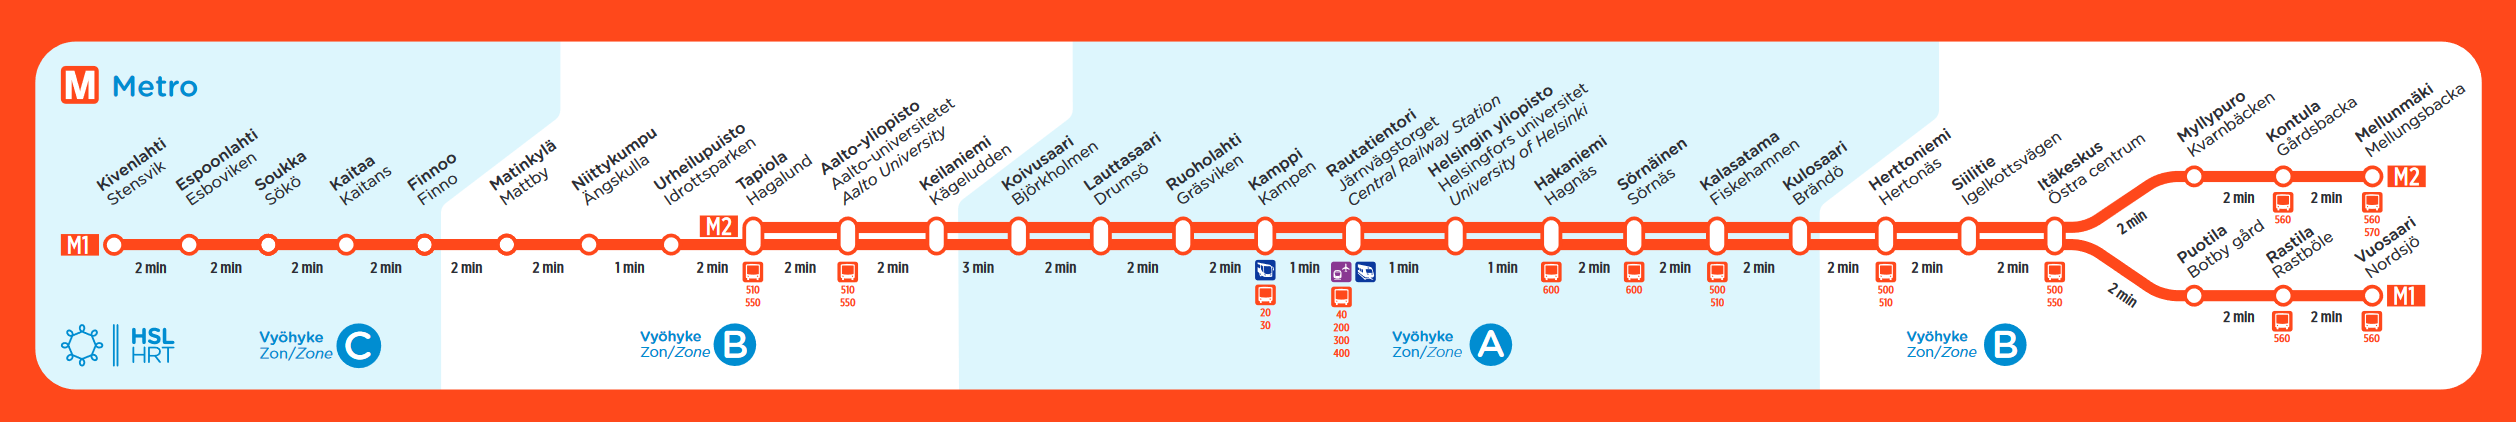 helsingin metroasemat kartta Helsingin metrokartta | Lomalista.fi